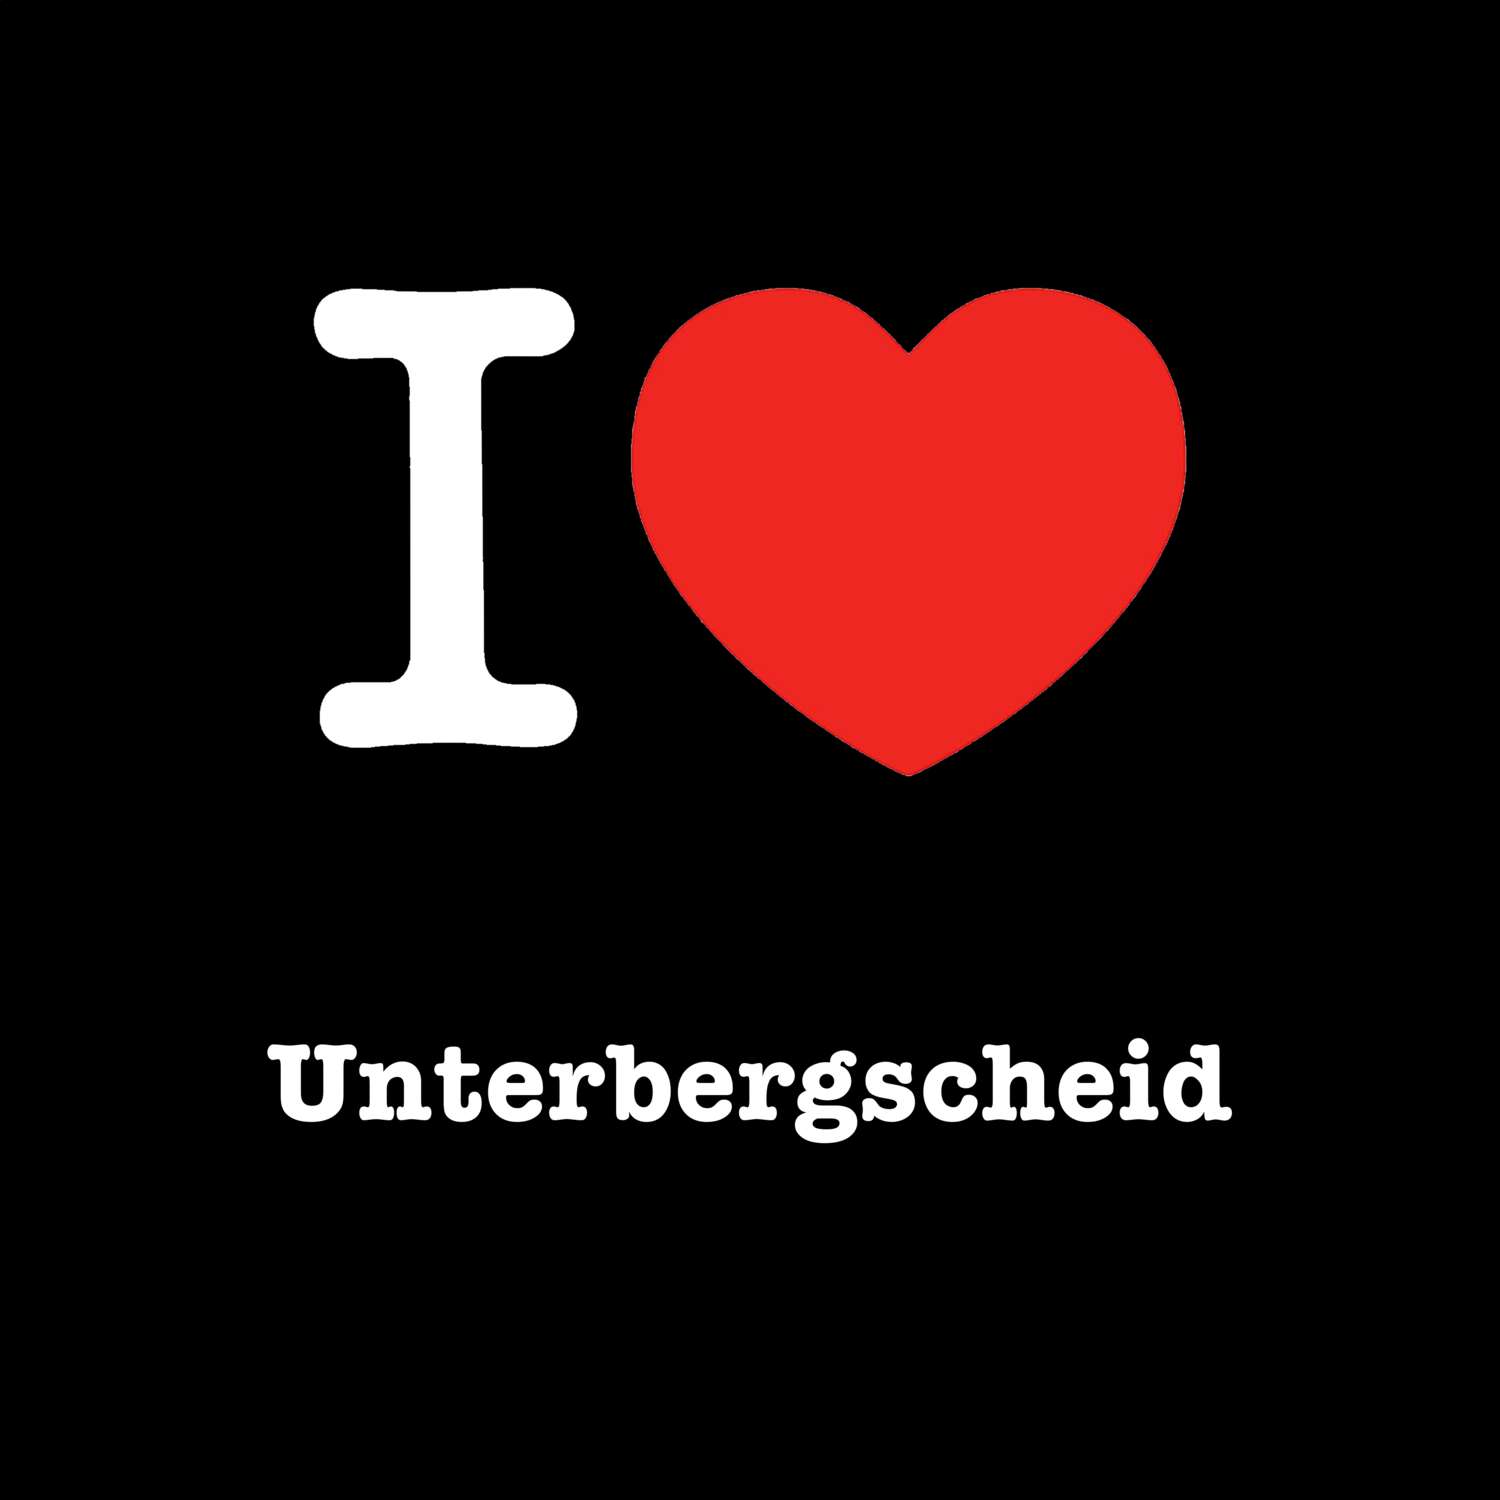 Unterbergscheid T-Shirt »I love«